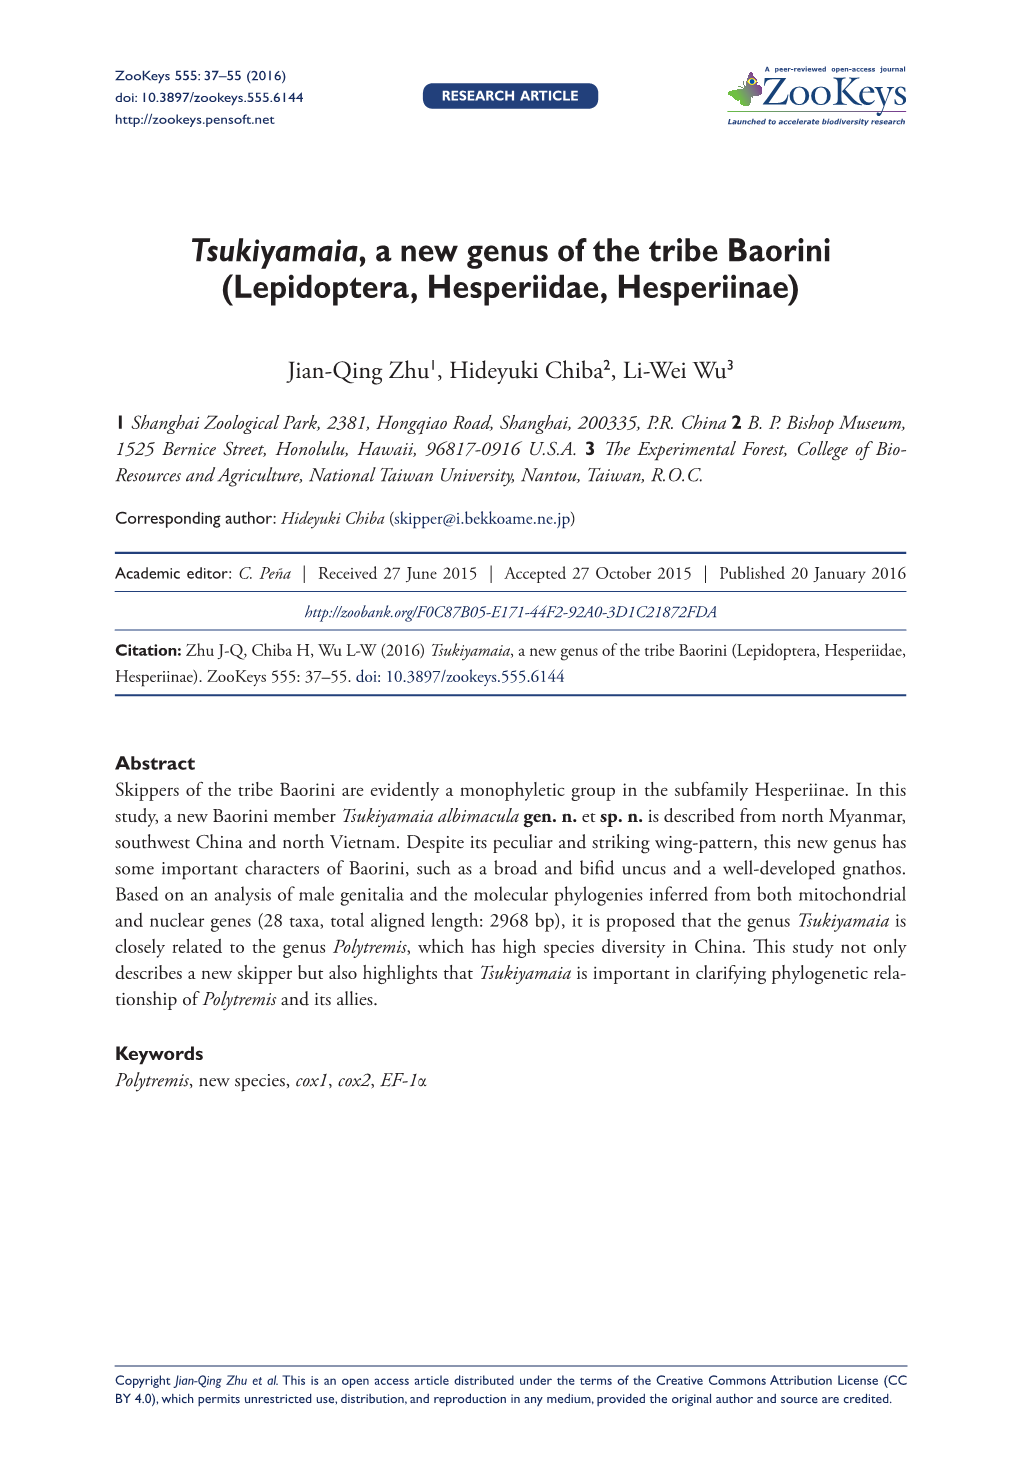 Tsukiyamaia, a New Genus of the Tribe Baorini (Lepidoptera, Hesperiidae, Hesperiinae)